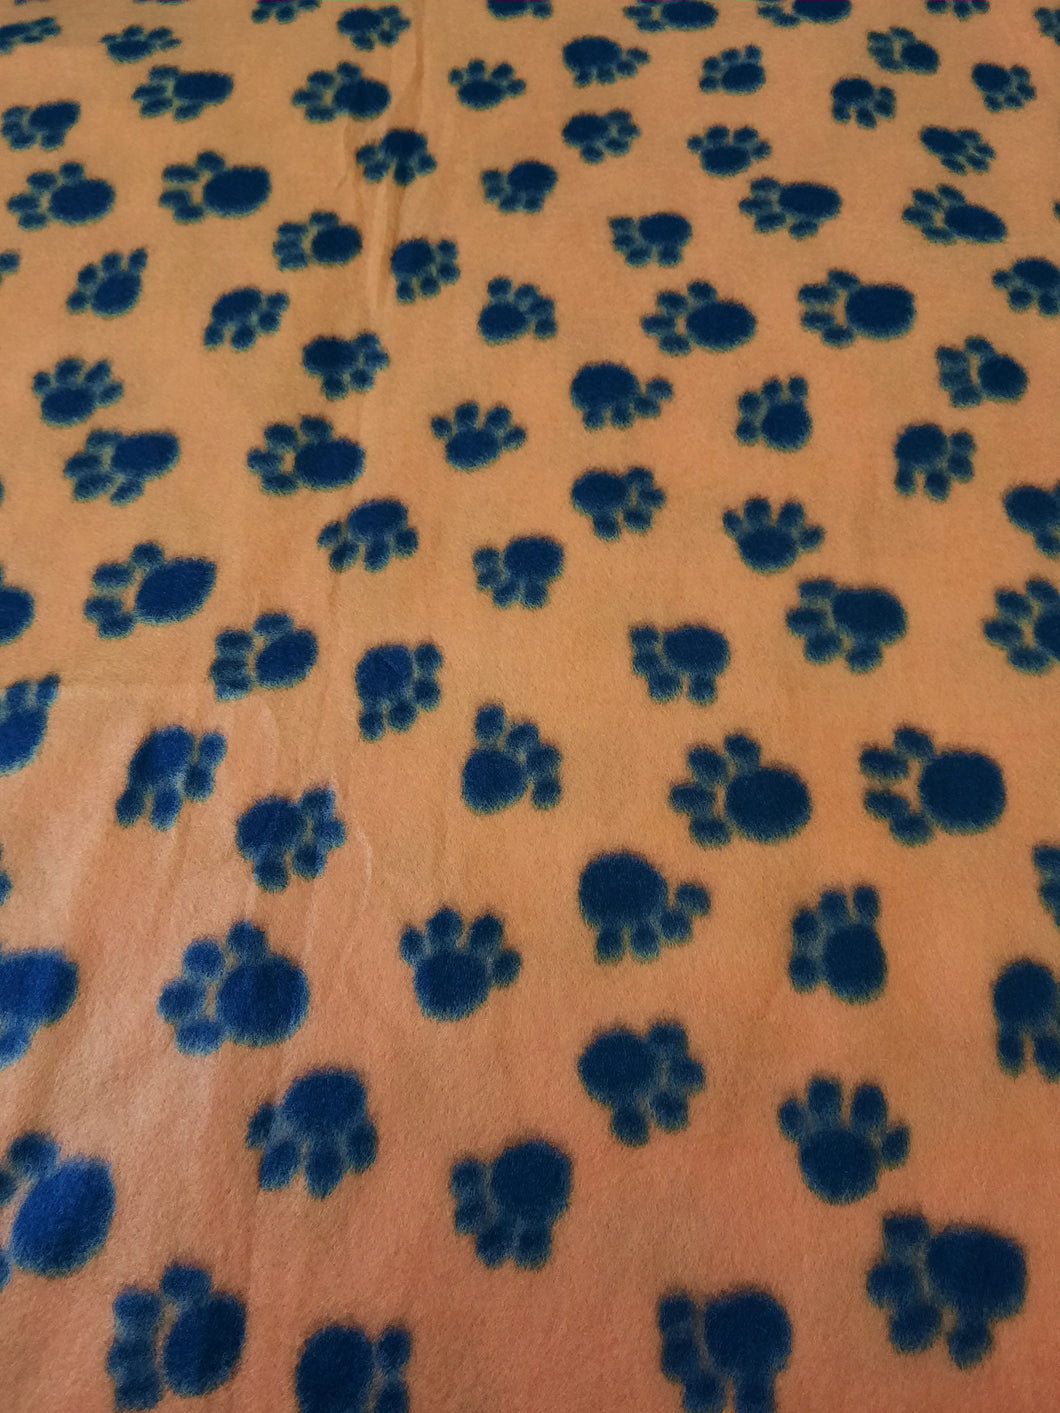 Throw Blanket - Paw Prints, Black on Orange Fleece::Matching